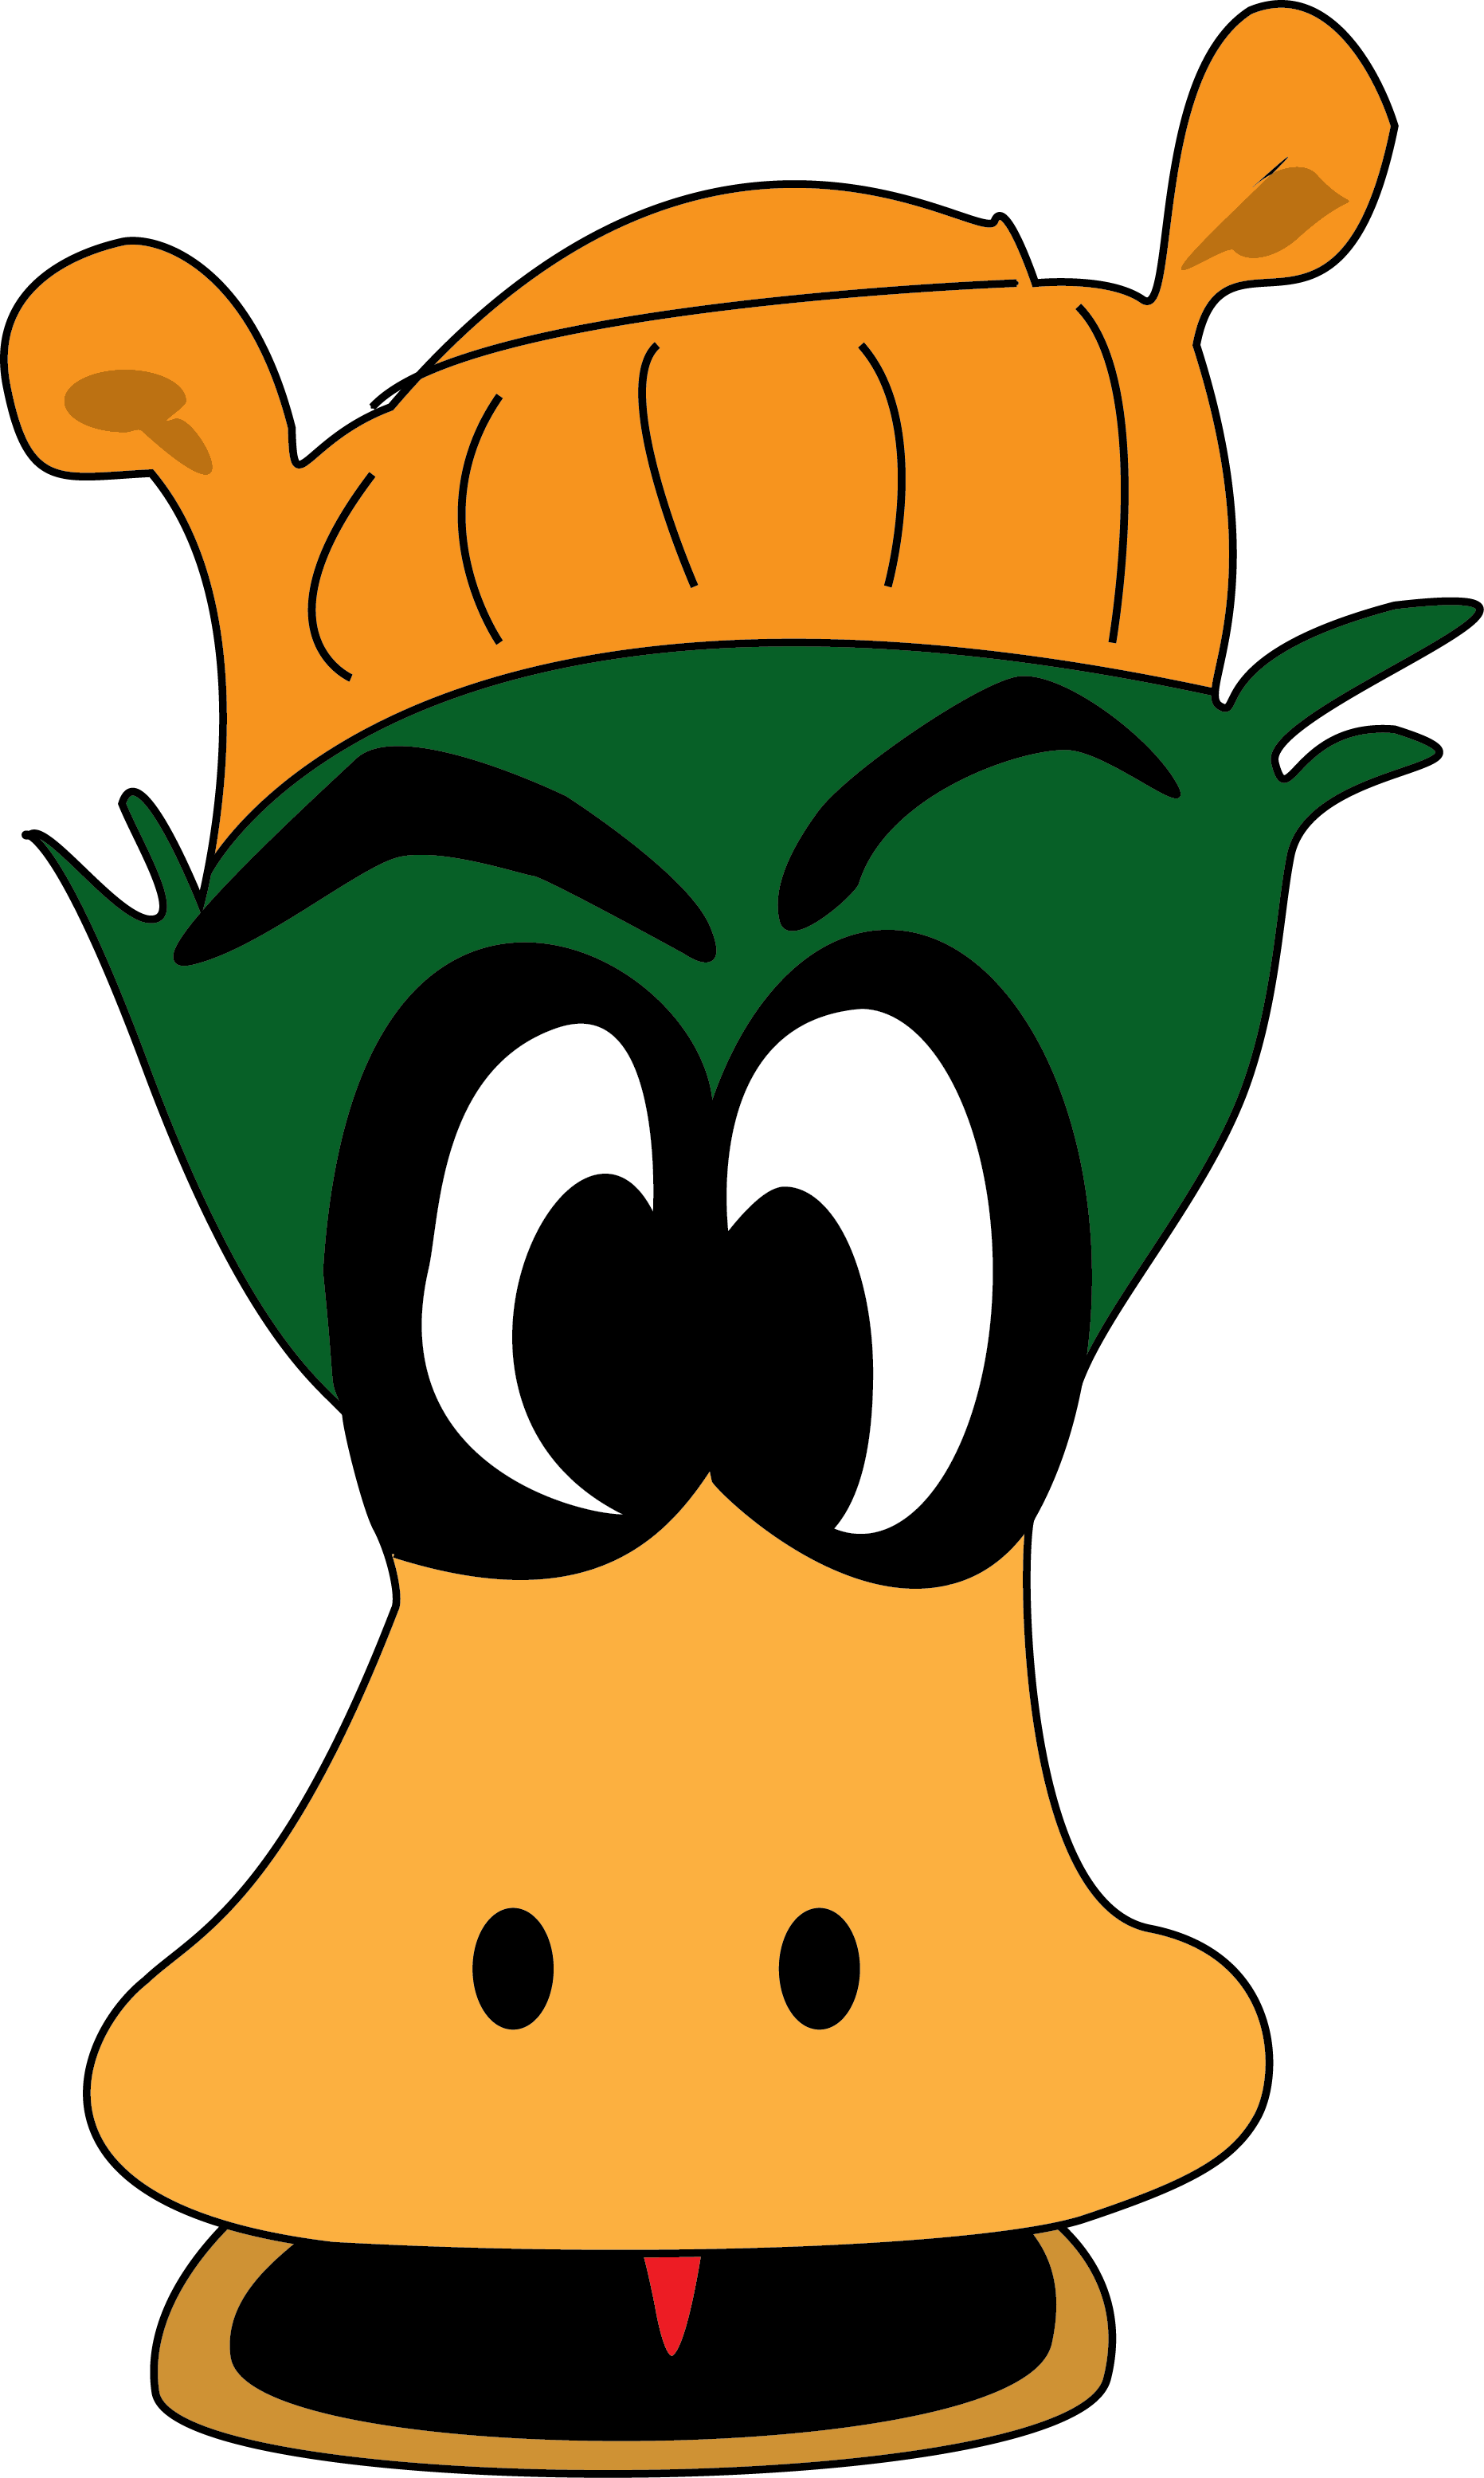 Angry Duck - - Verrückte Grüne Cartoon-enten-unterschiedliche Visitenkarte (1863x3110)